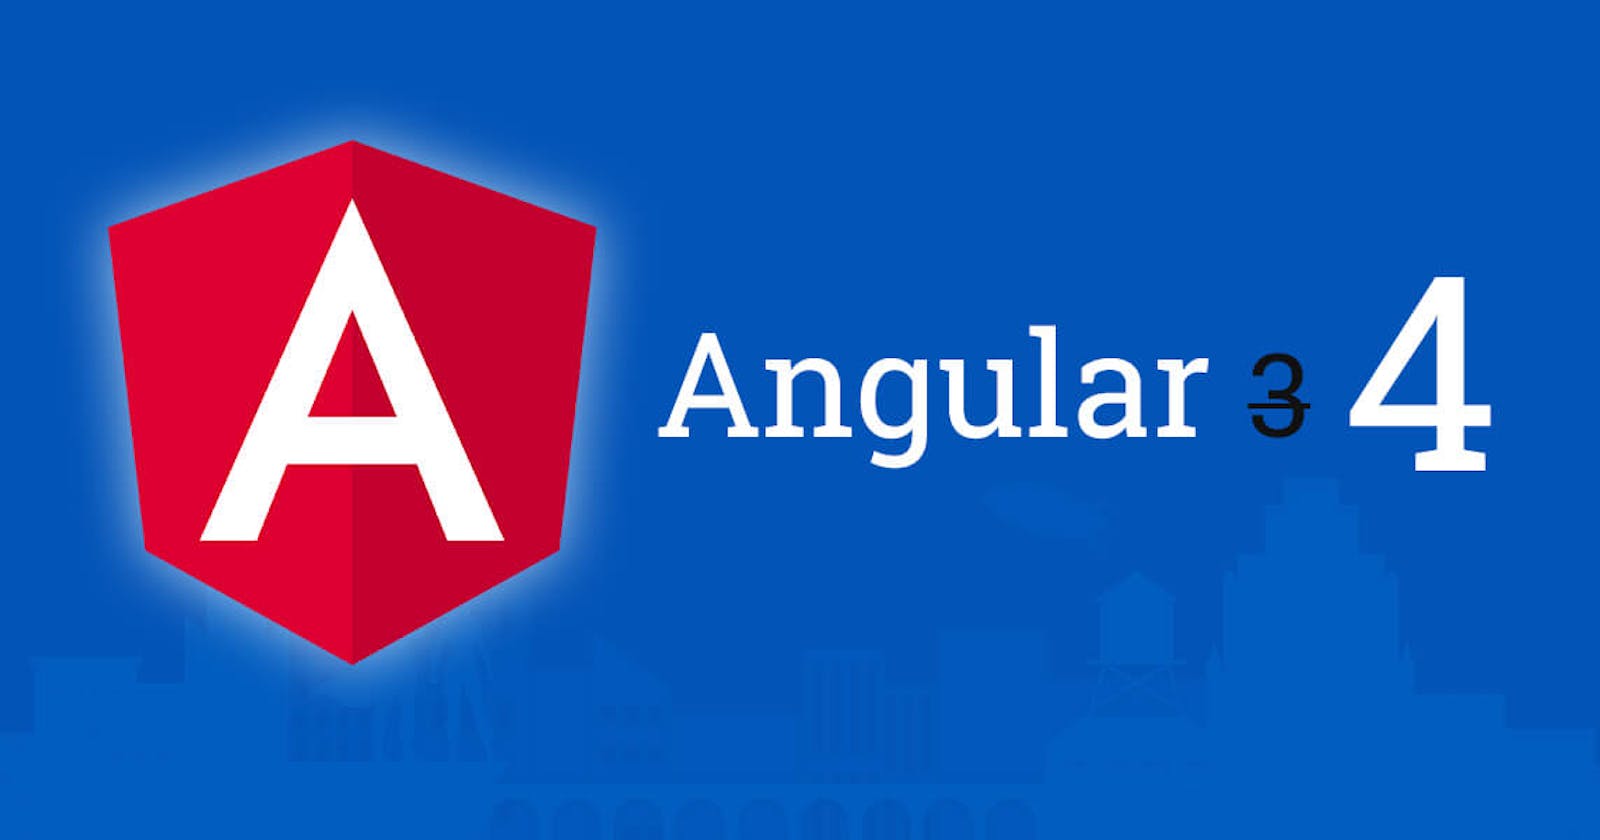 Angular 4 Is The Next Version Instead of Angular 3